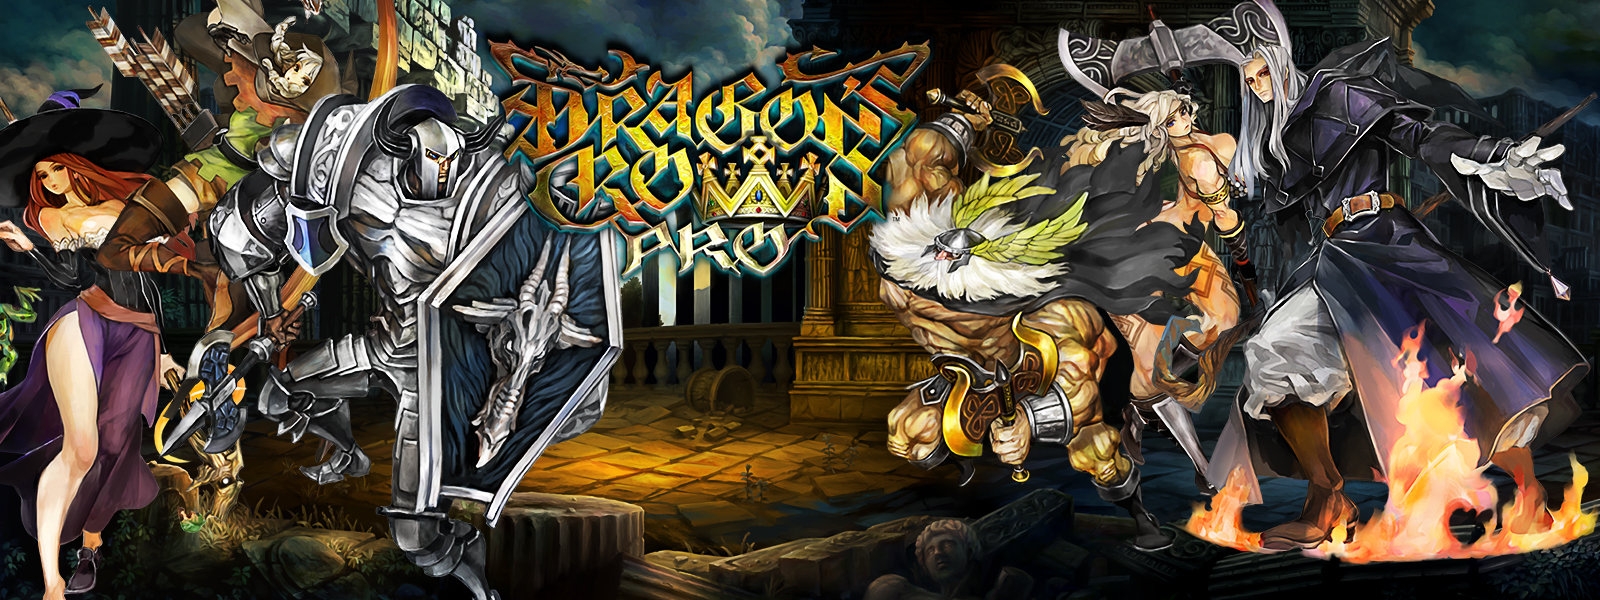 dragons-crown-pro-normal-hero-01-ps4-us-30nov17